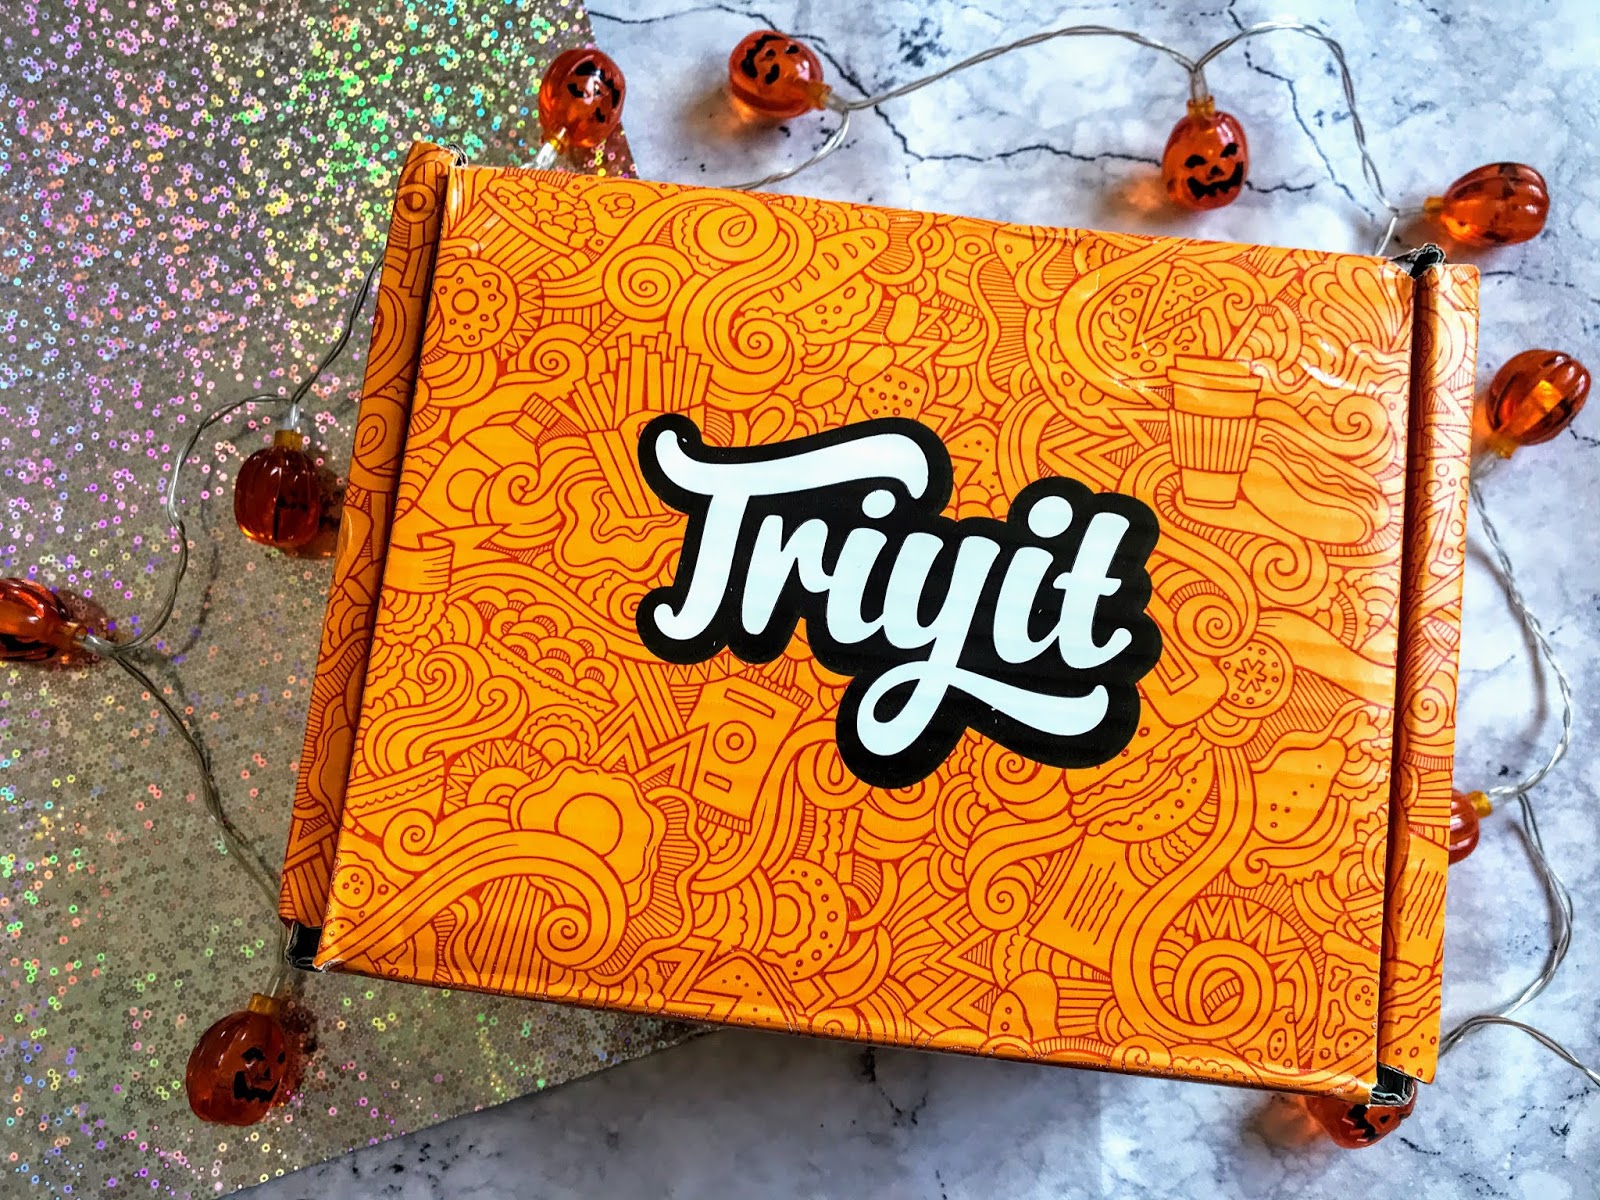 Triyit 'Tickled Taste Buds' Box Review | Freebie 